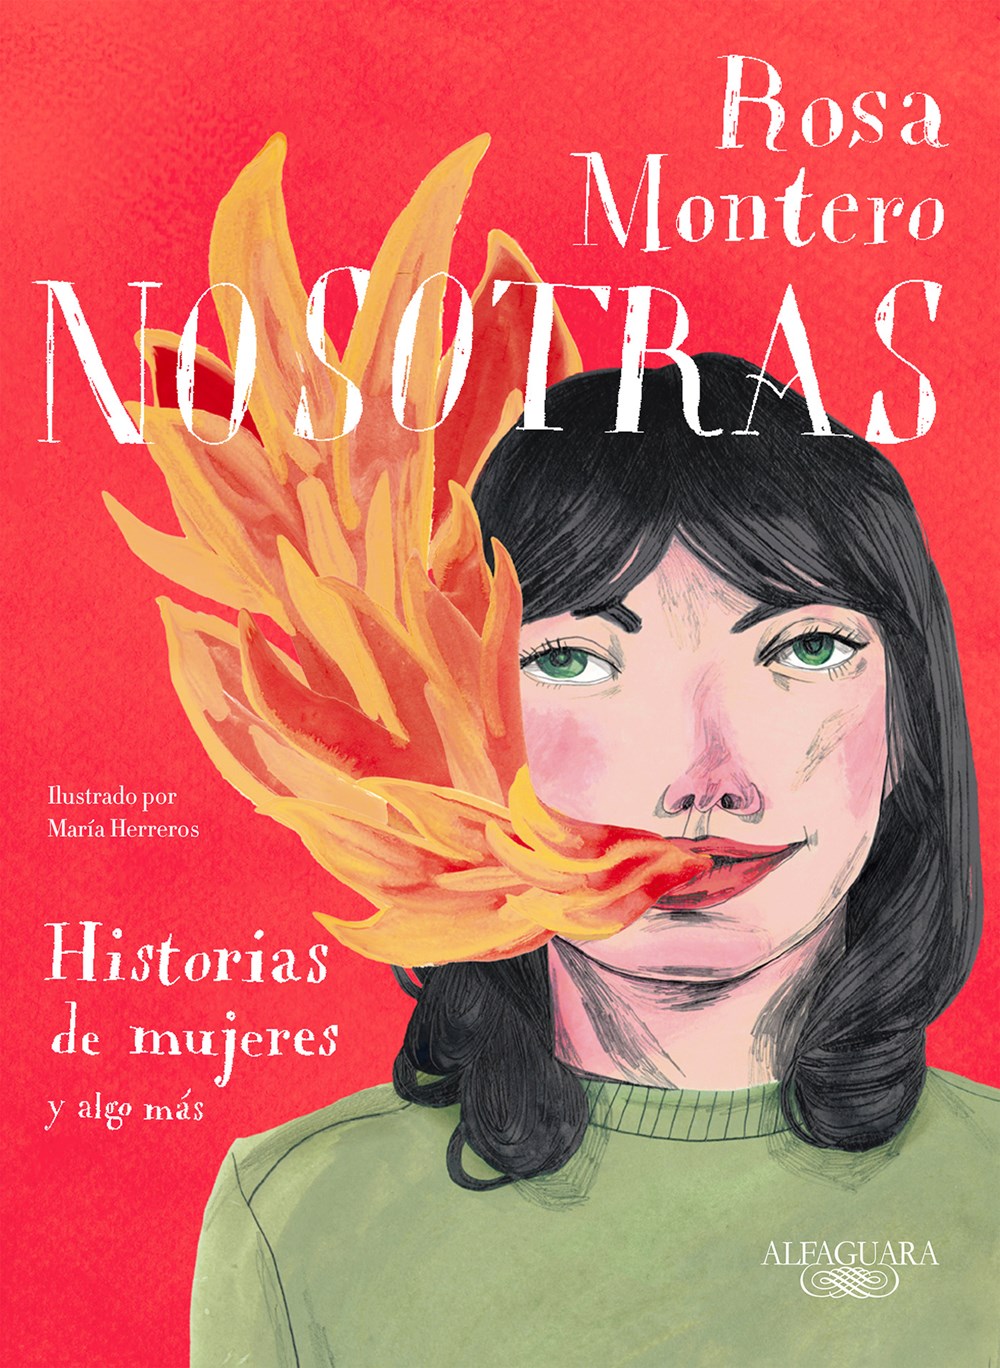 Image for "Nosotras"